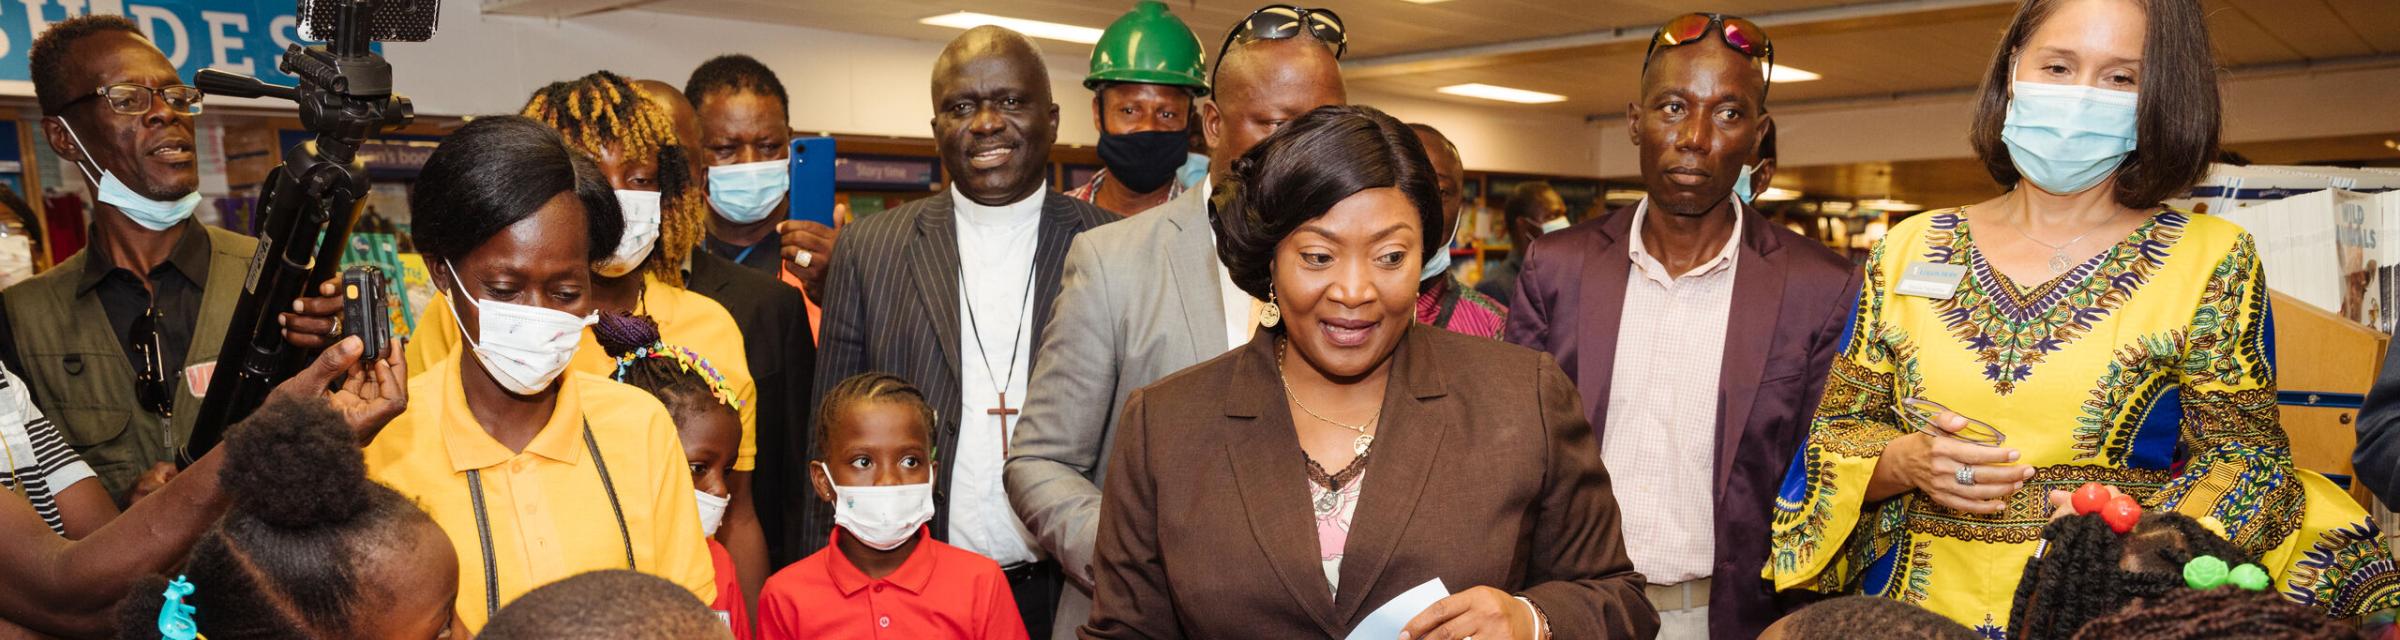 Monrovia, Liberia :: Vice President of Liberia Jewel Taylor visits Logos Hope.